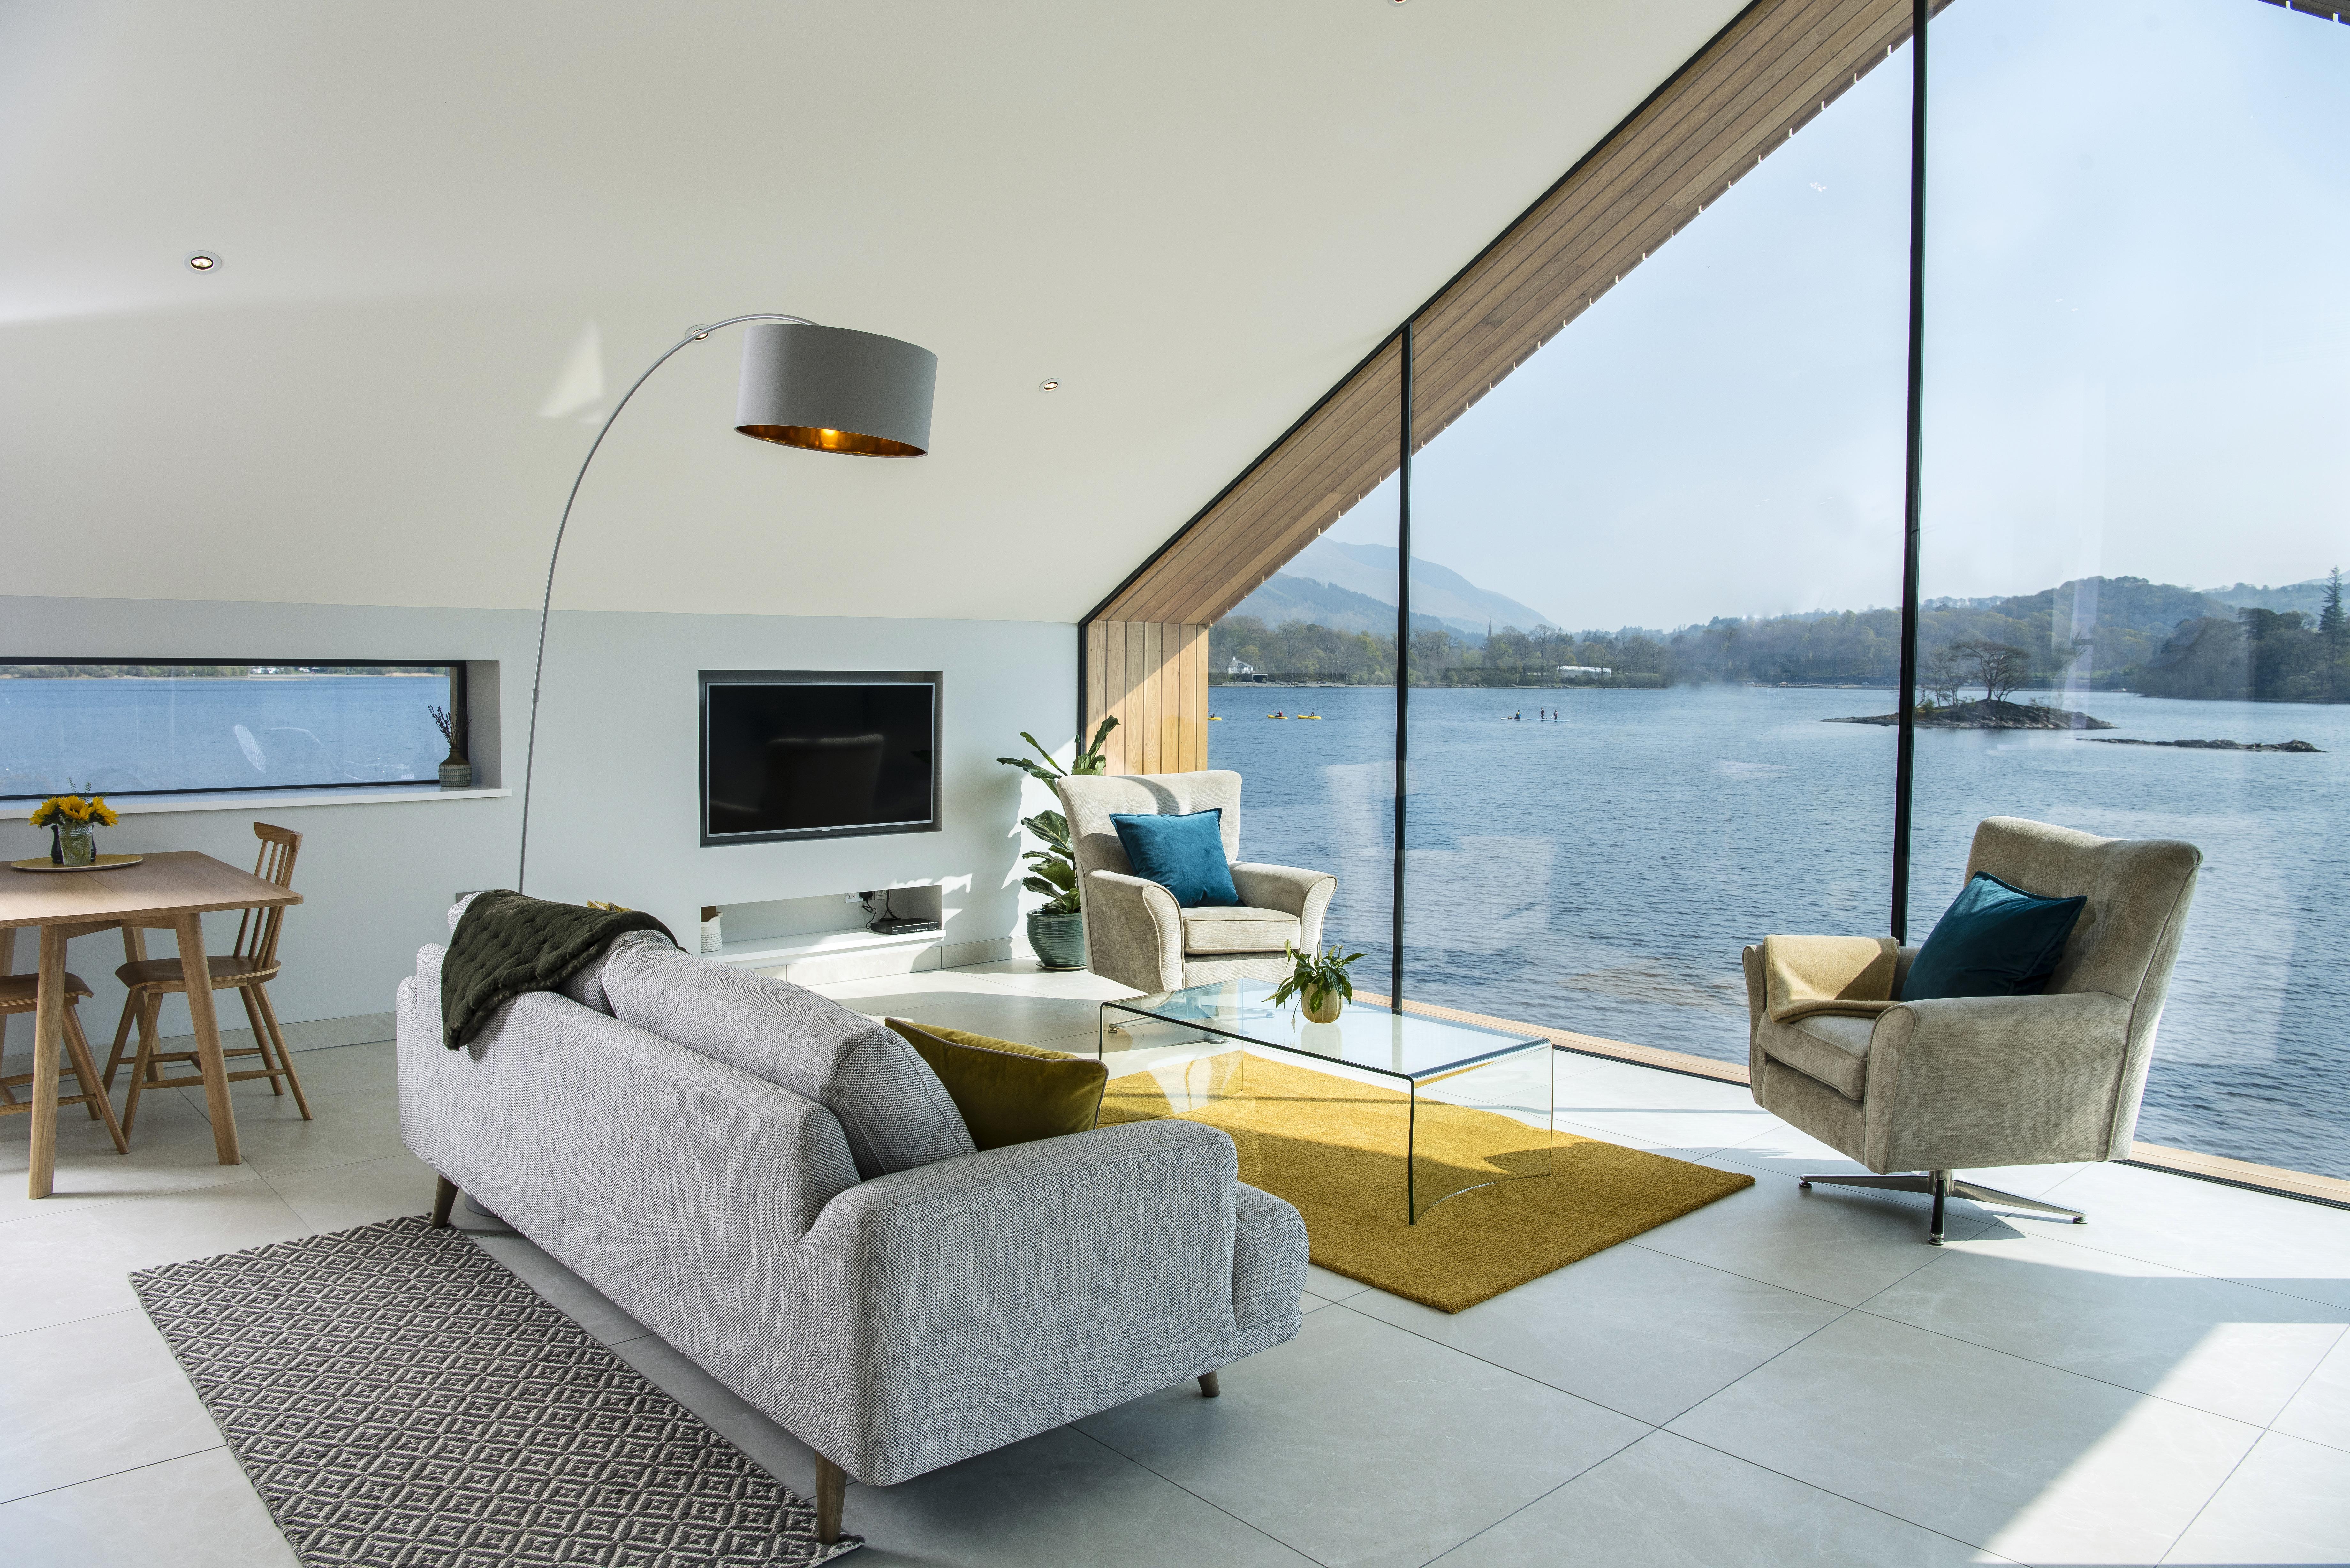 Best luxury winter cabins in the UK